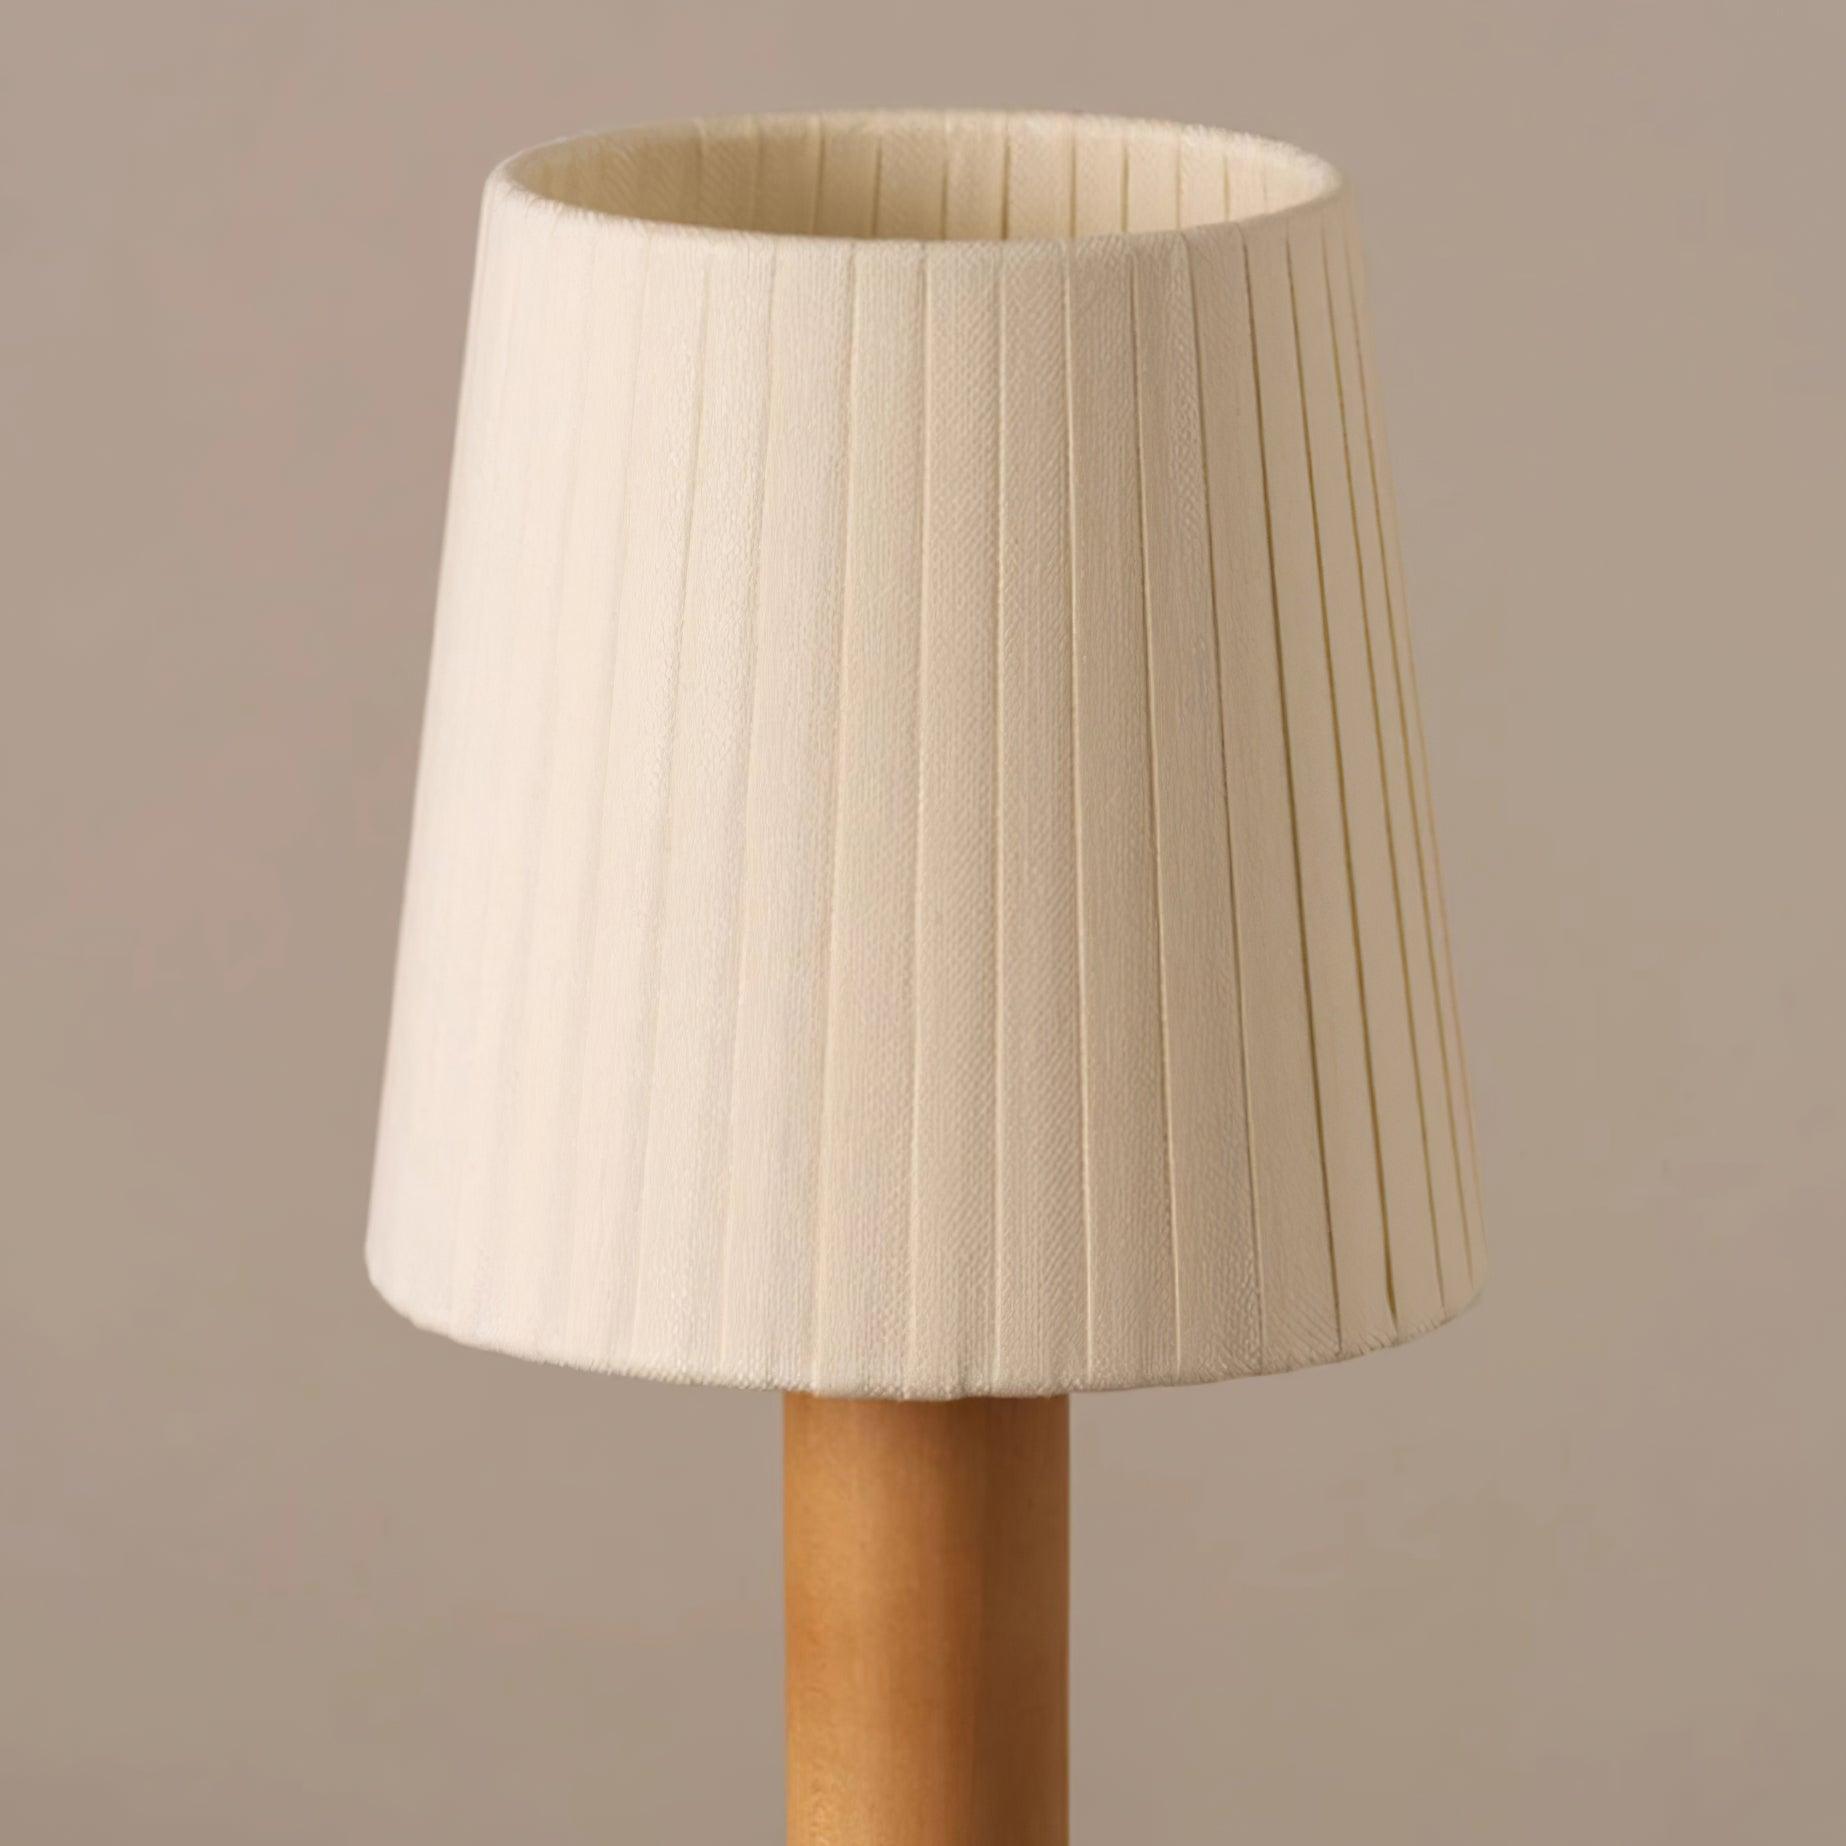 Minima Portable Table Lamp